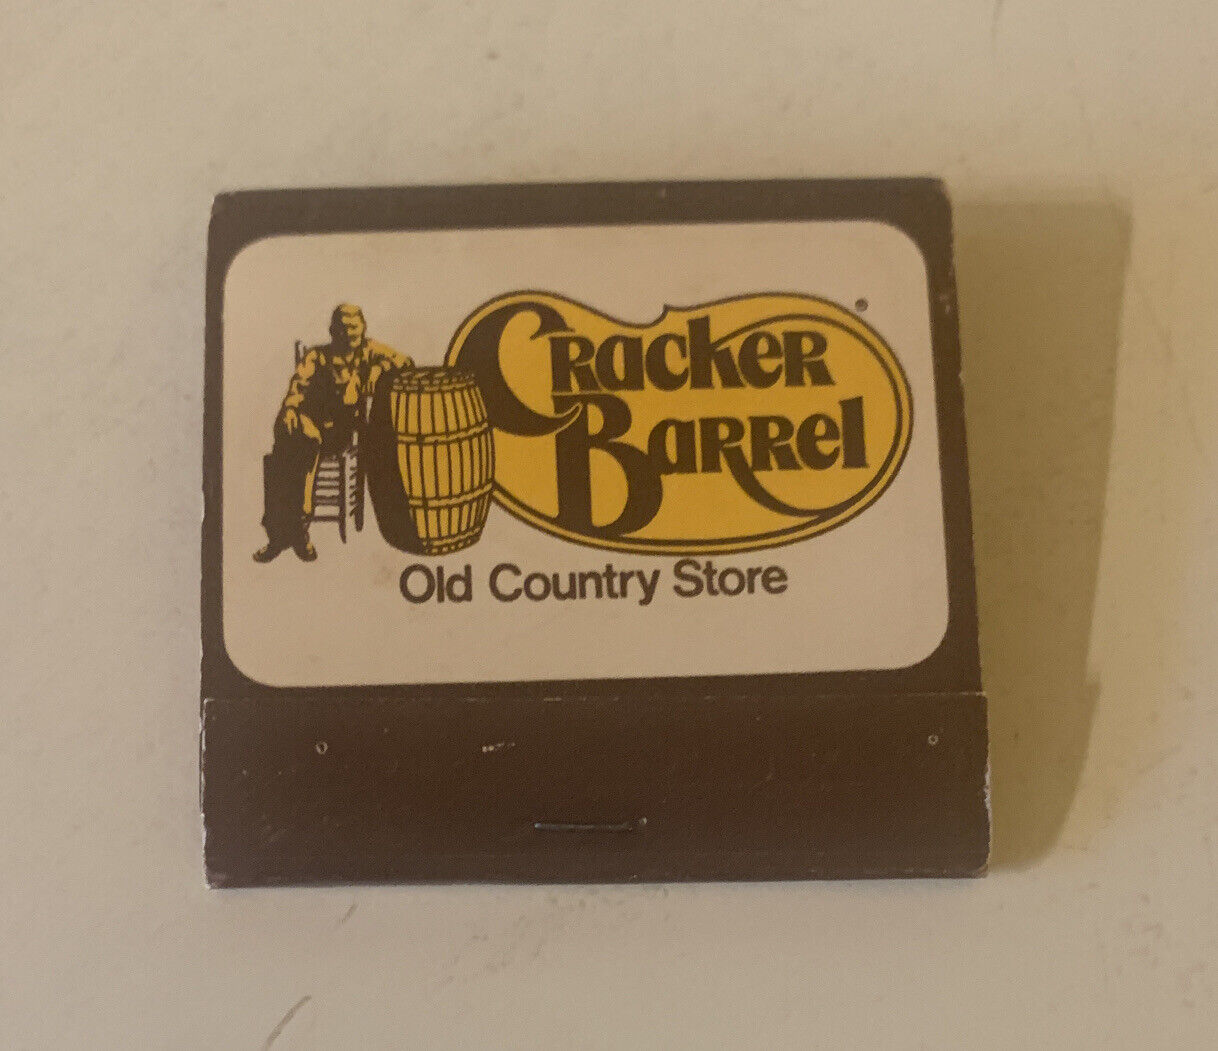 Vintage Cracker Barrel Restaurant Matchbook Matches Ad Souvenir Collect Full